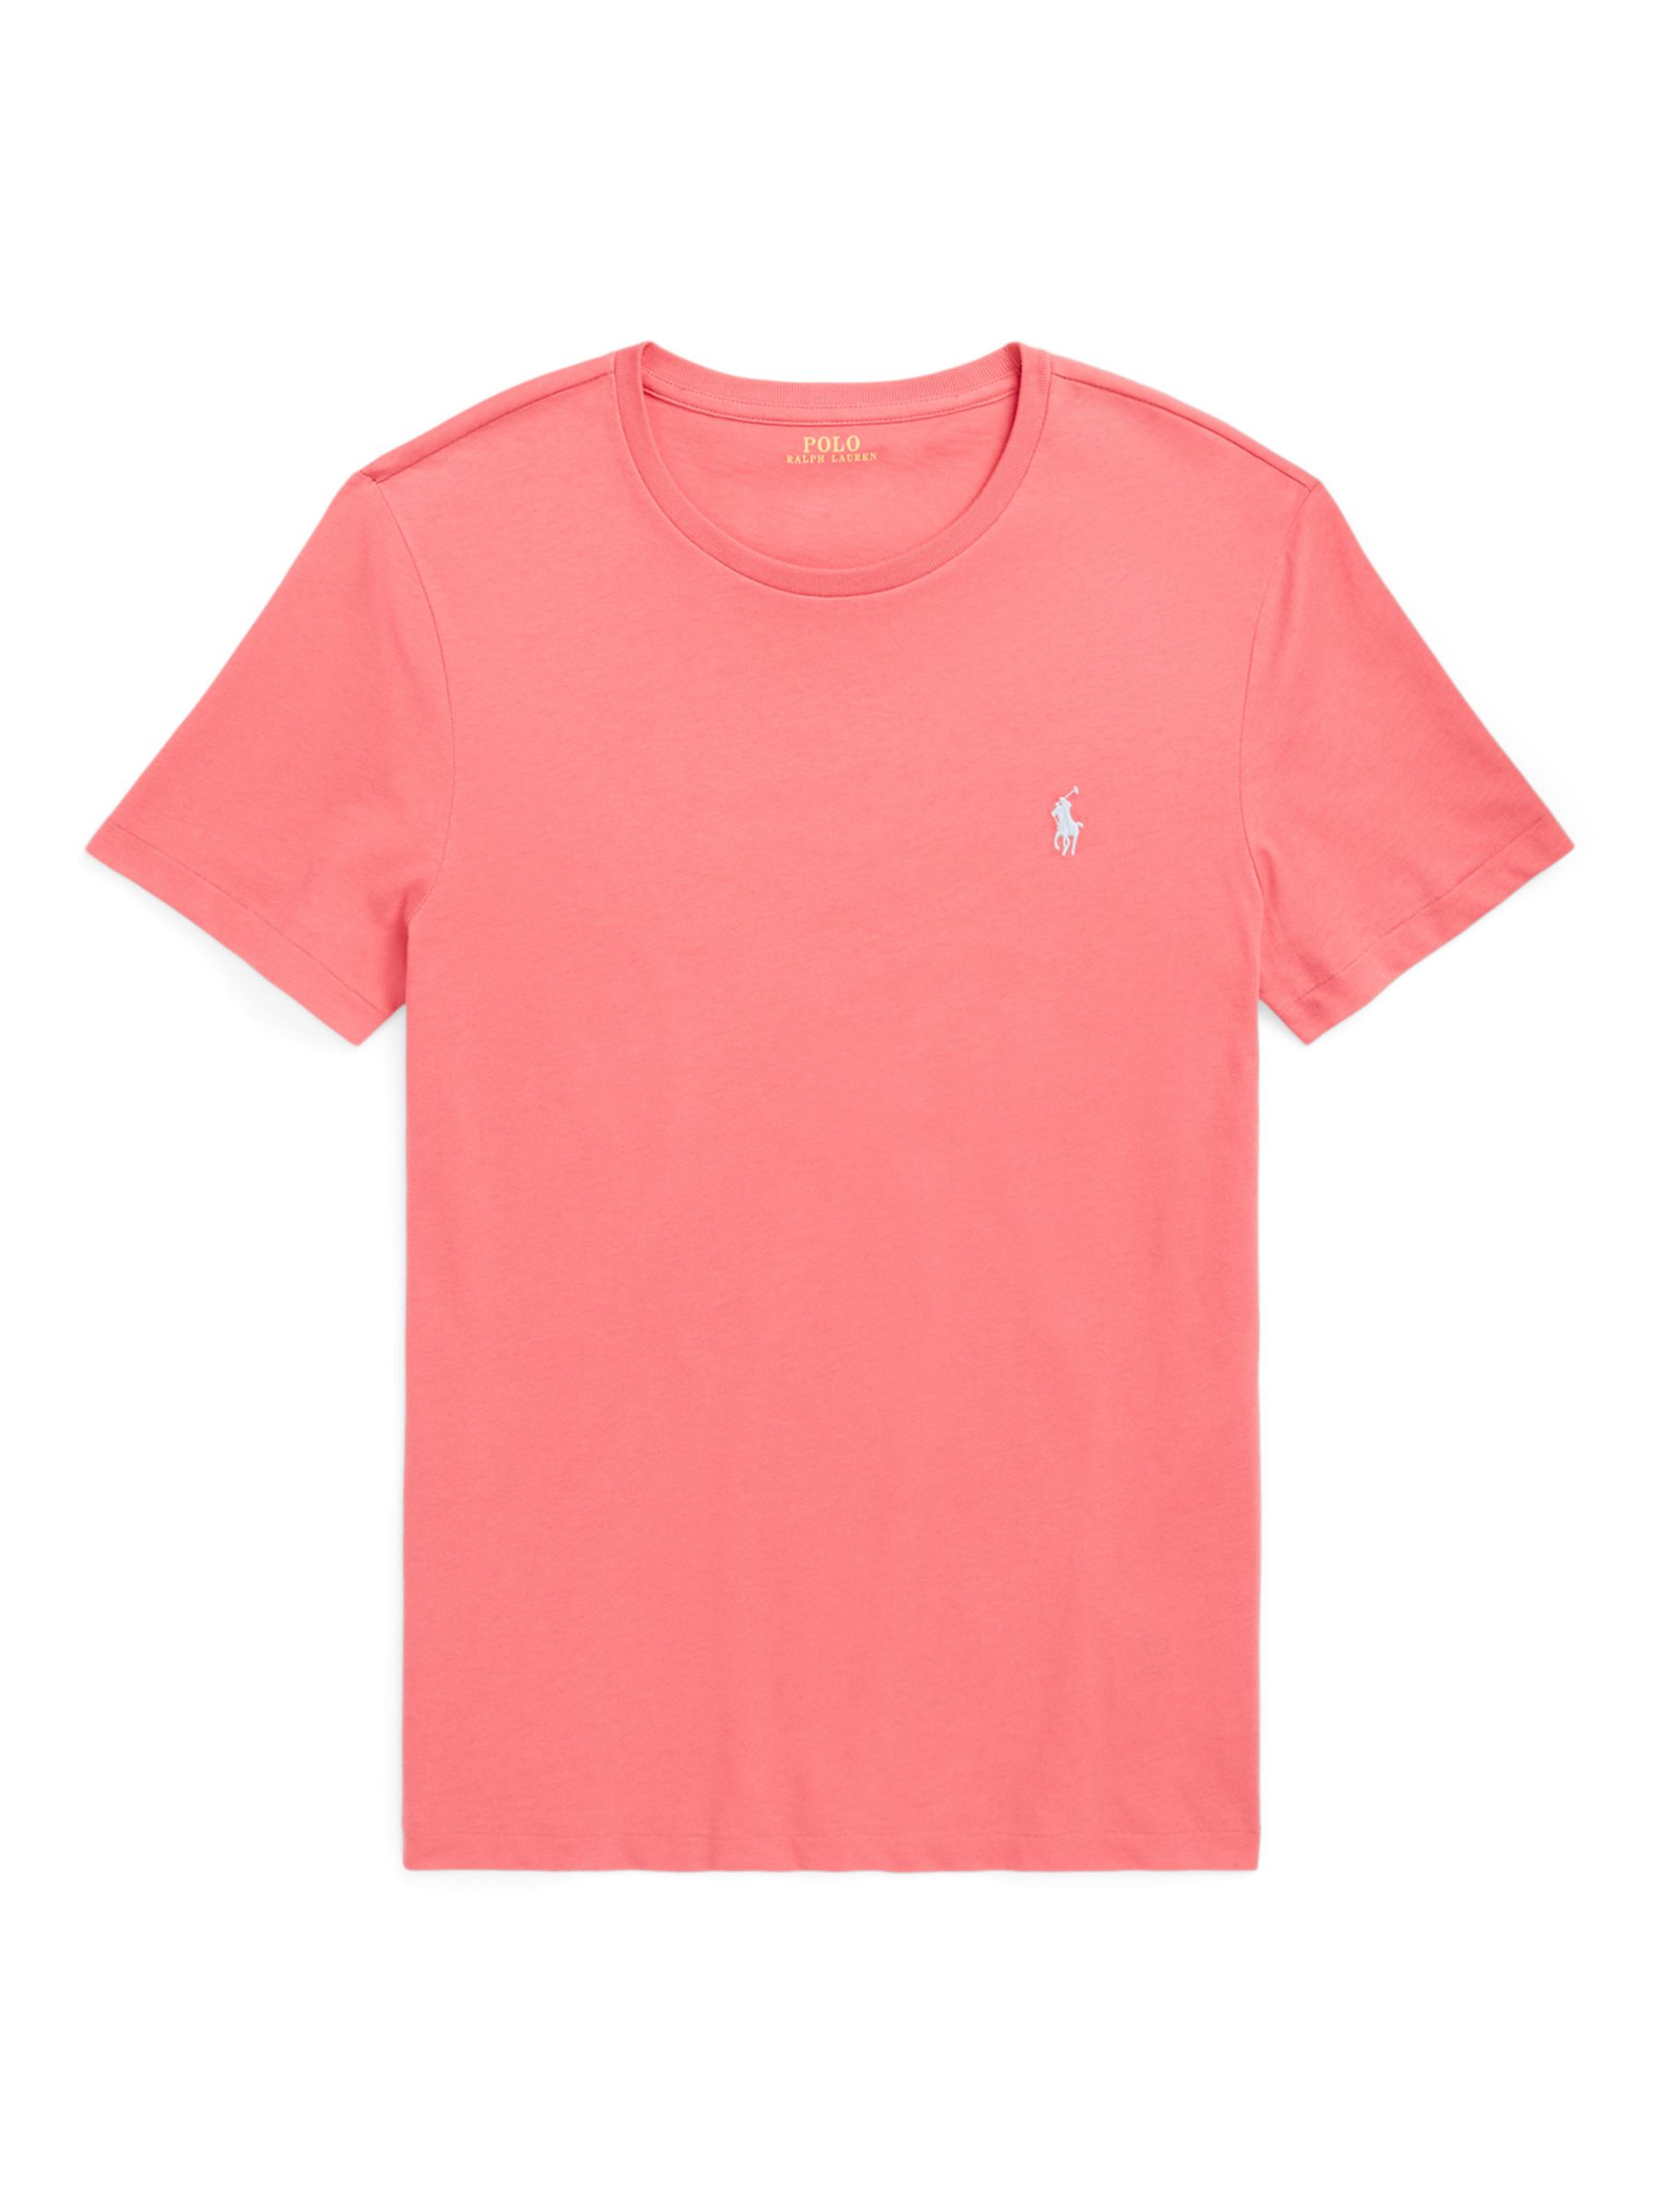 Ralph Lauren Slim Fit Jersey Crew Neck T-Shirt, Pale Red/C7194, L